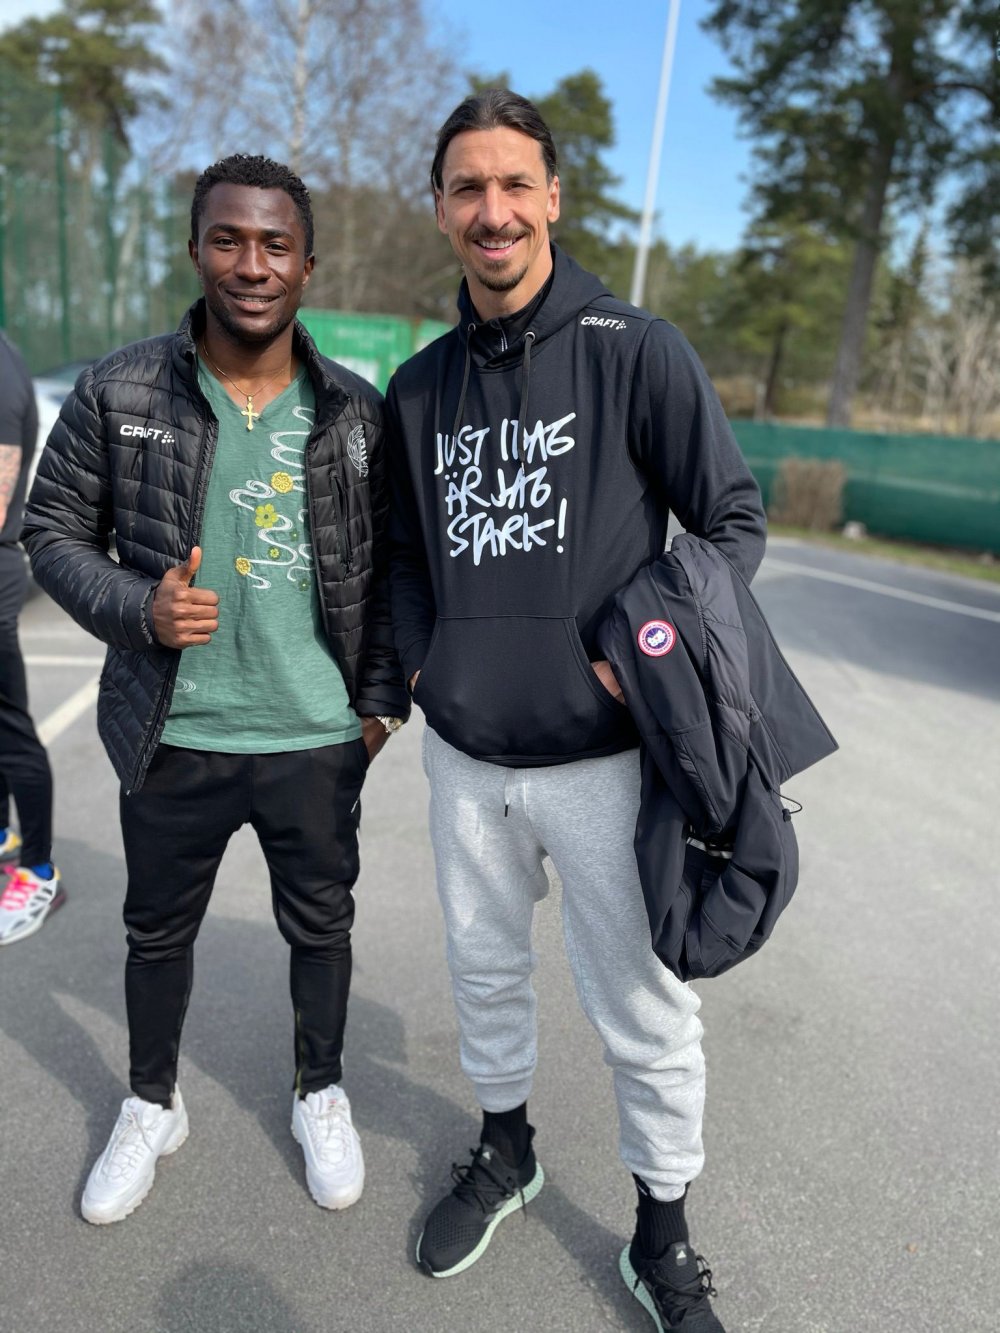 Nigerian player with Ibrahimovic